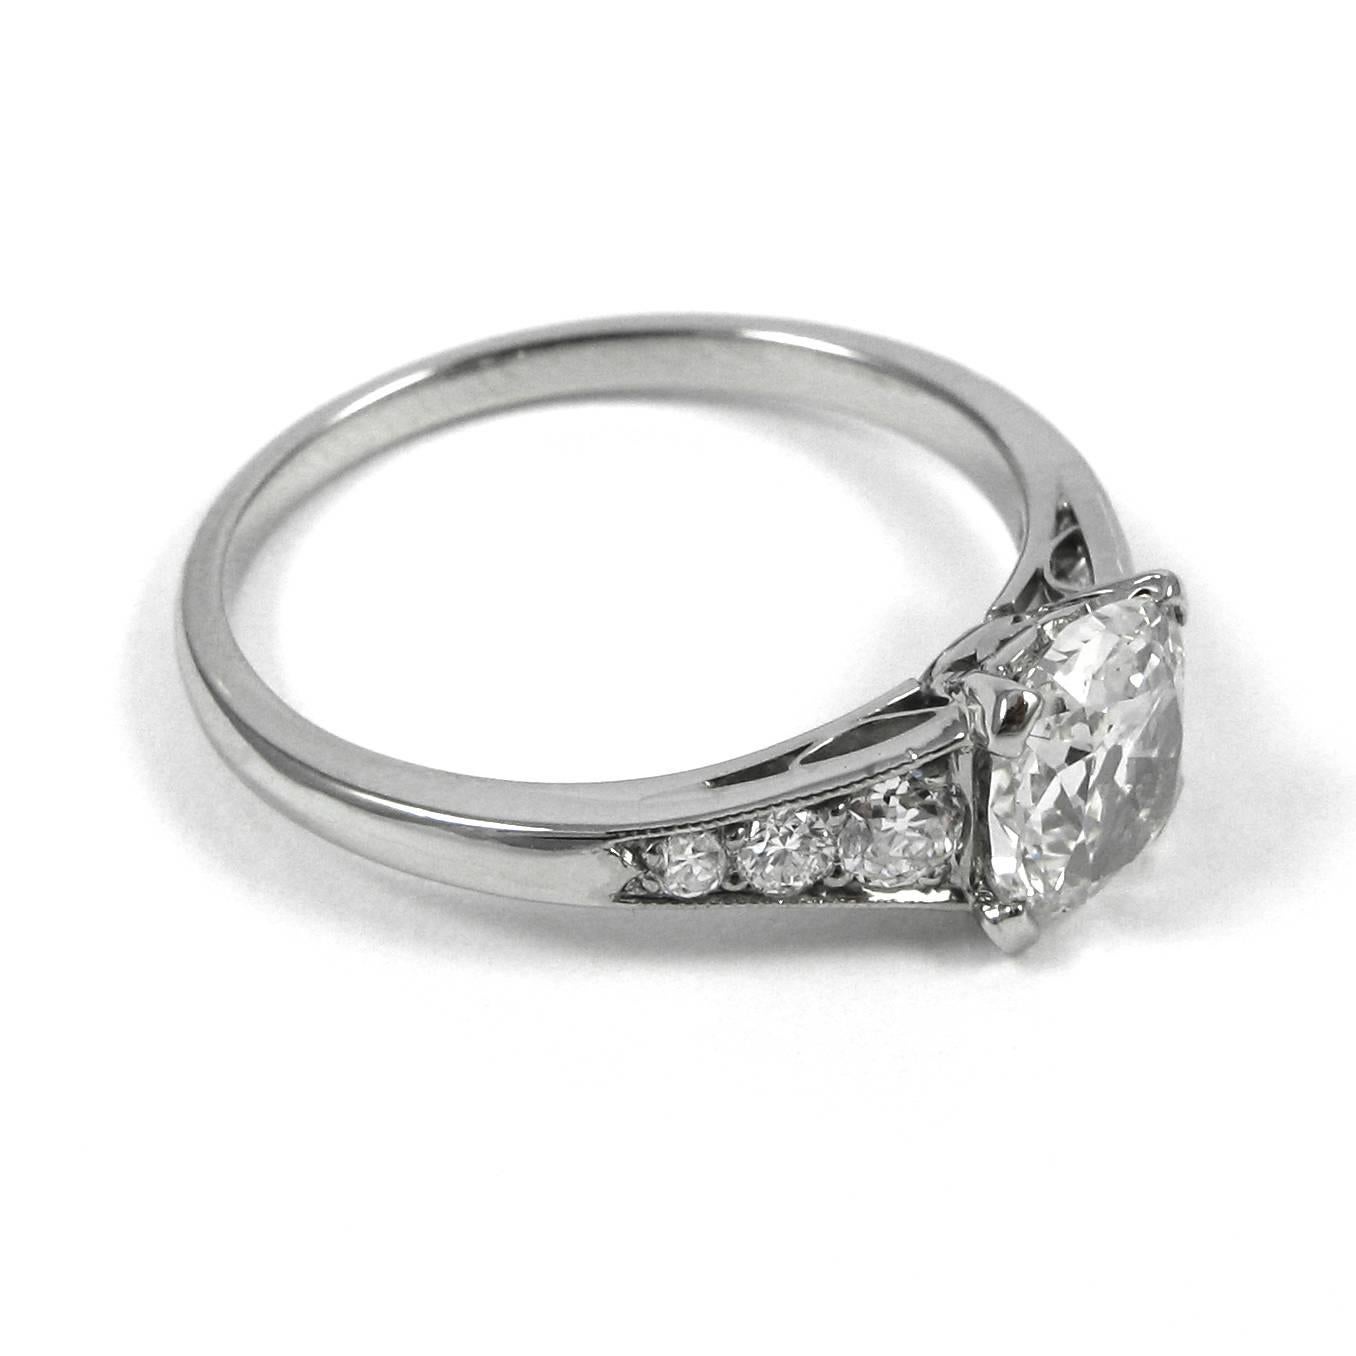 1.07 carat diamond ring